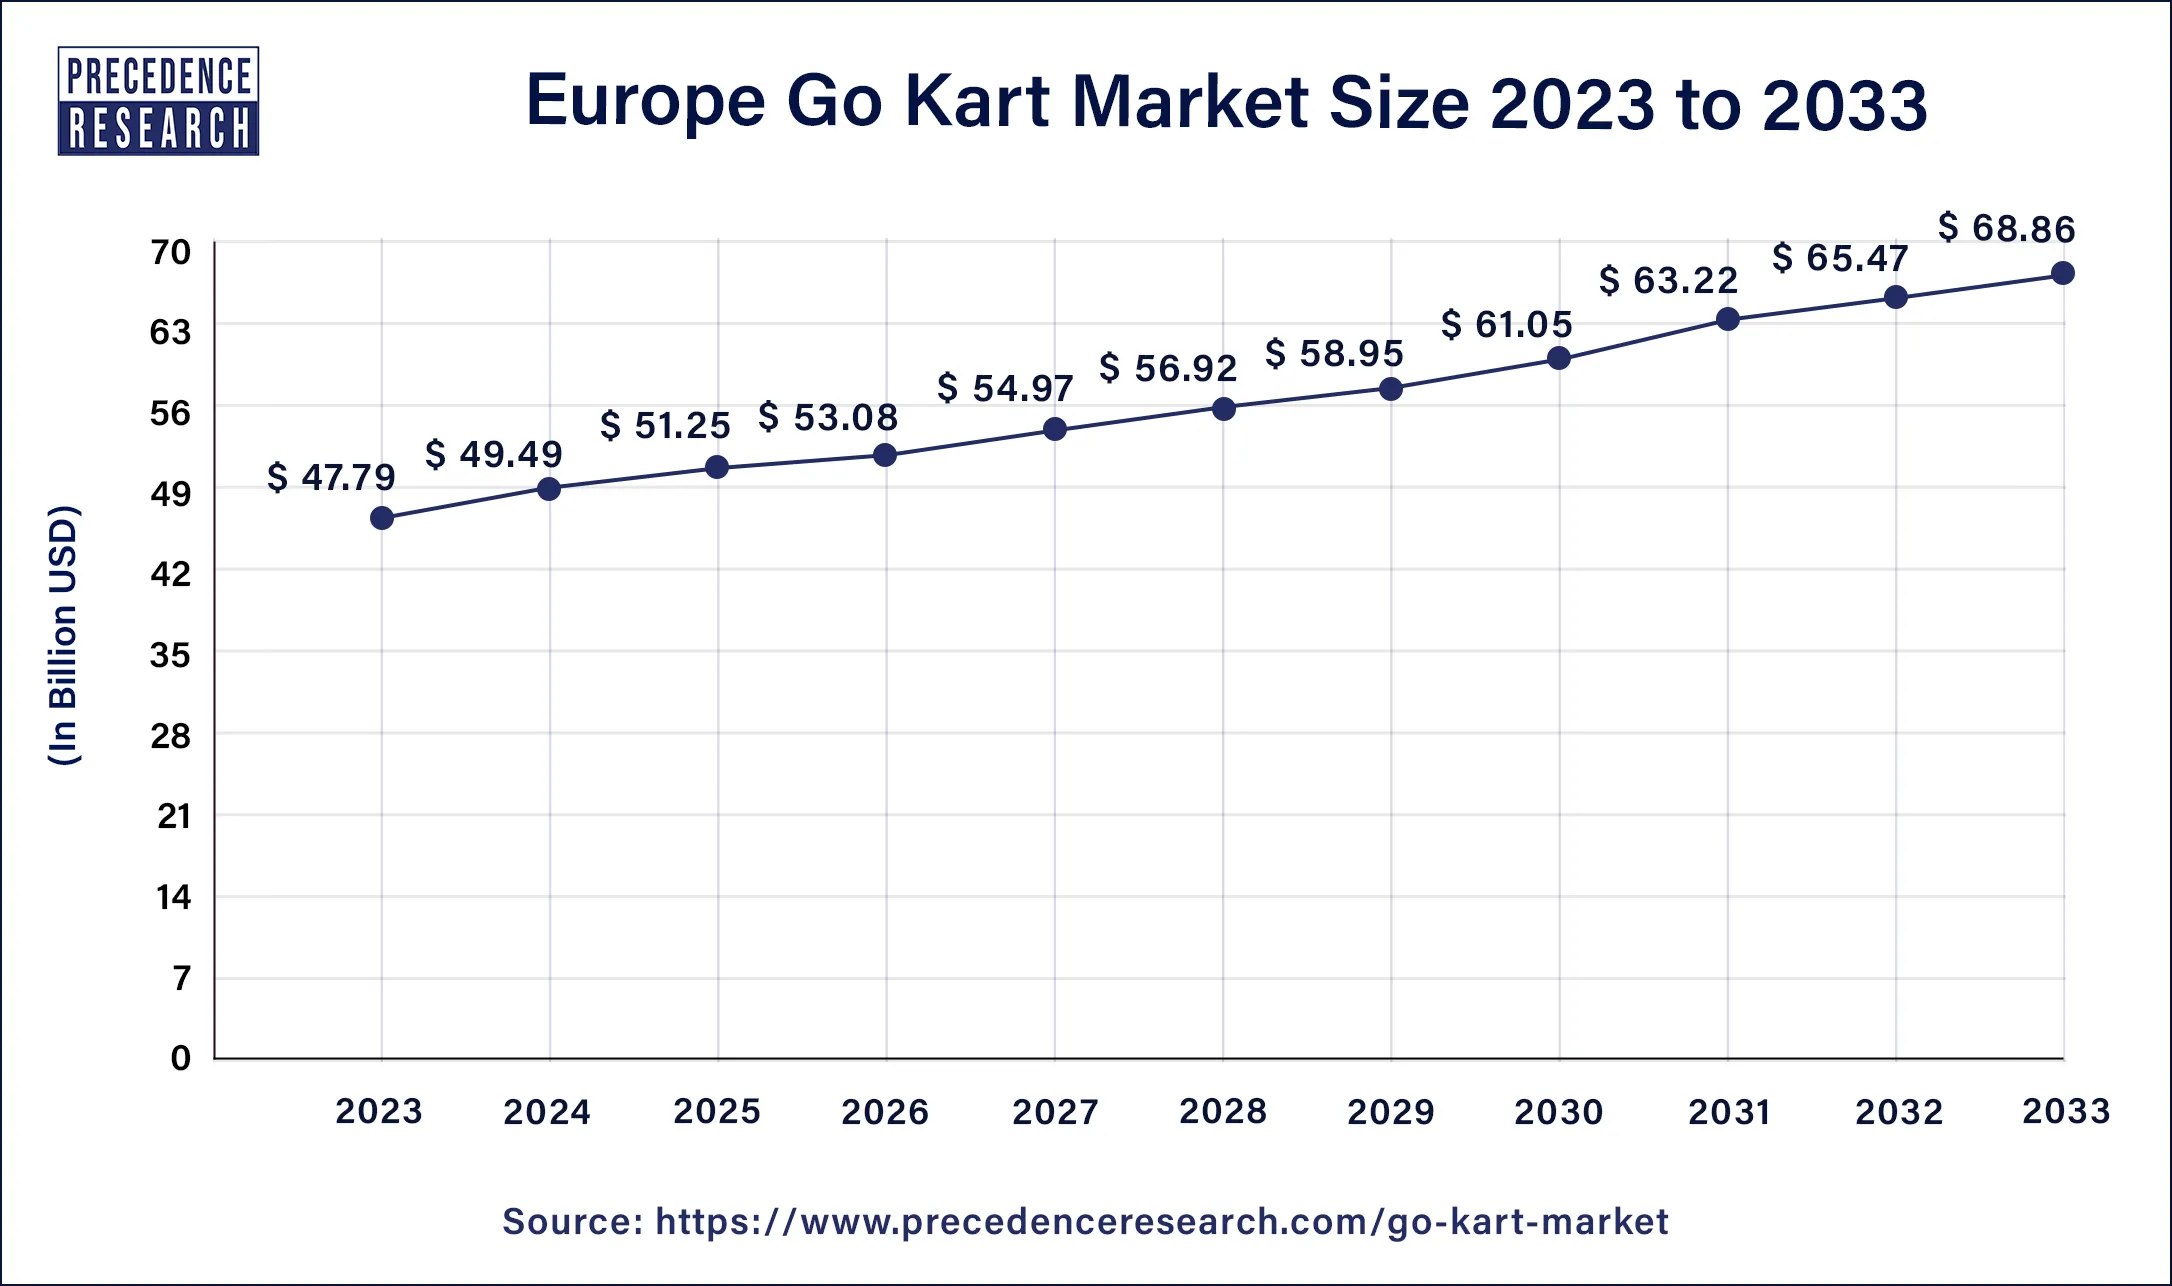 Europe Go Kart Market Size 2024 to 2033